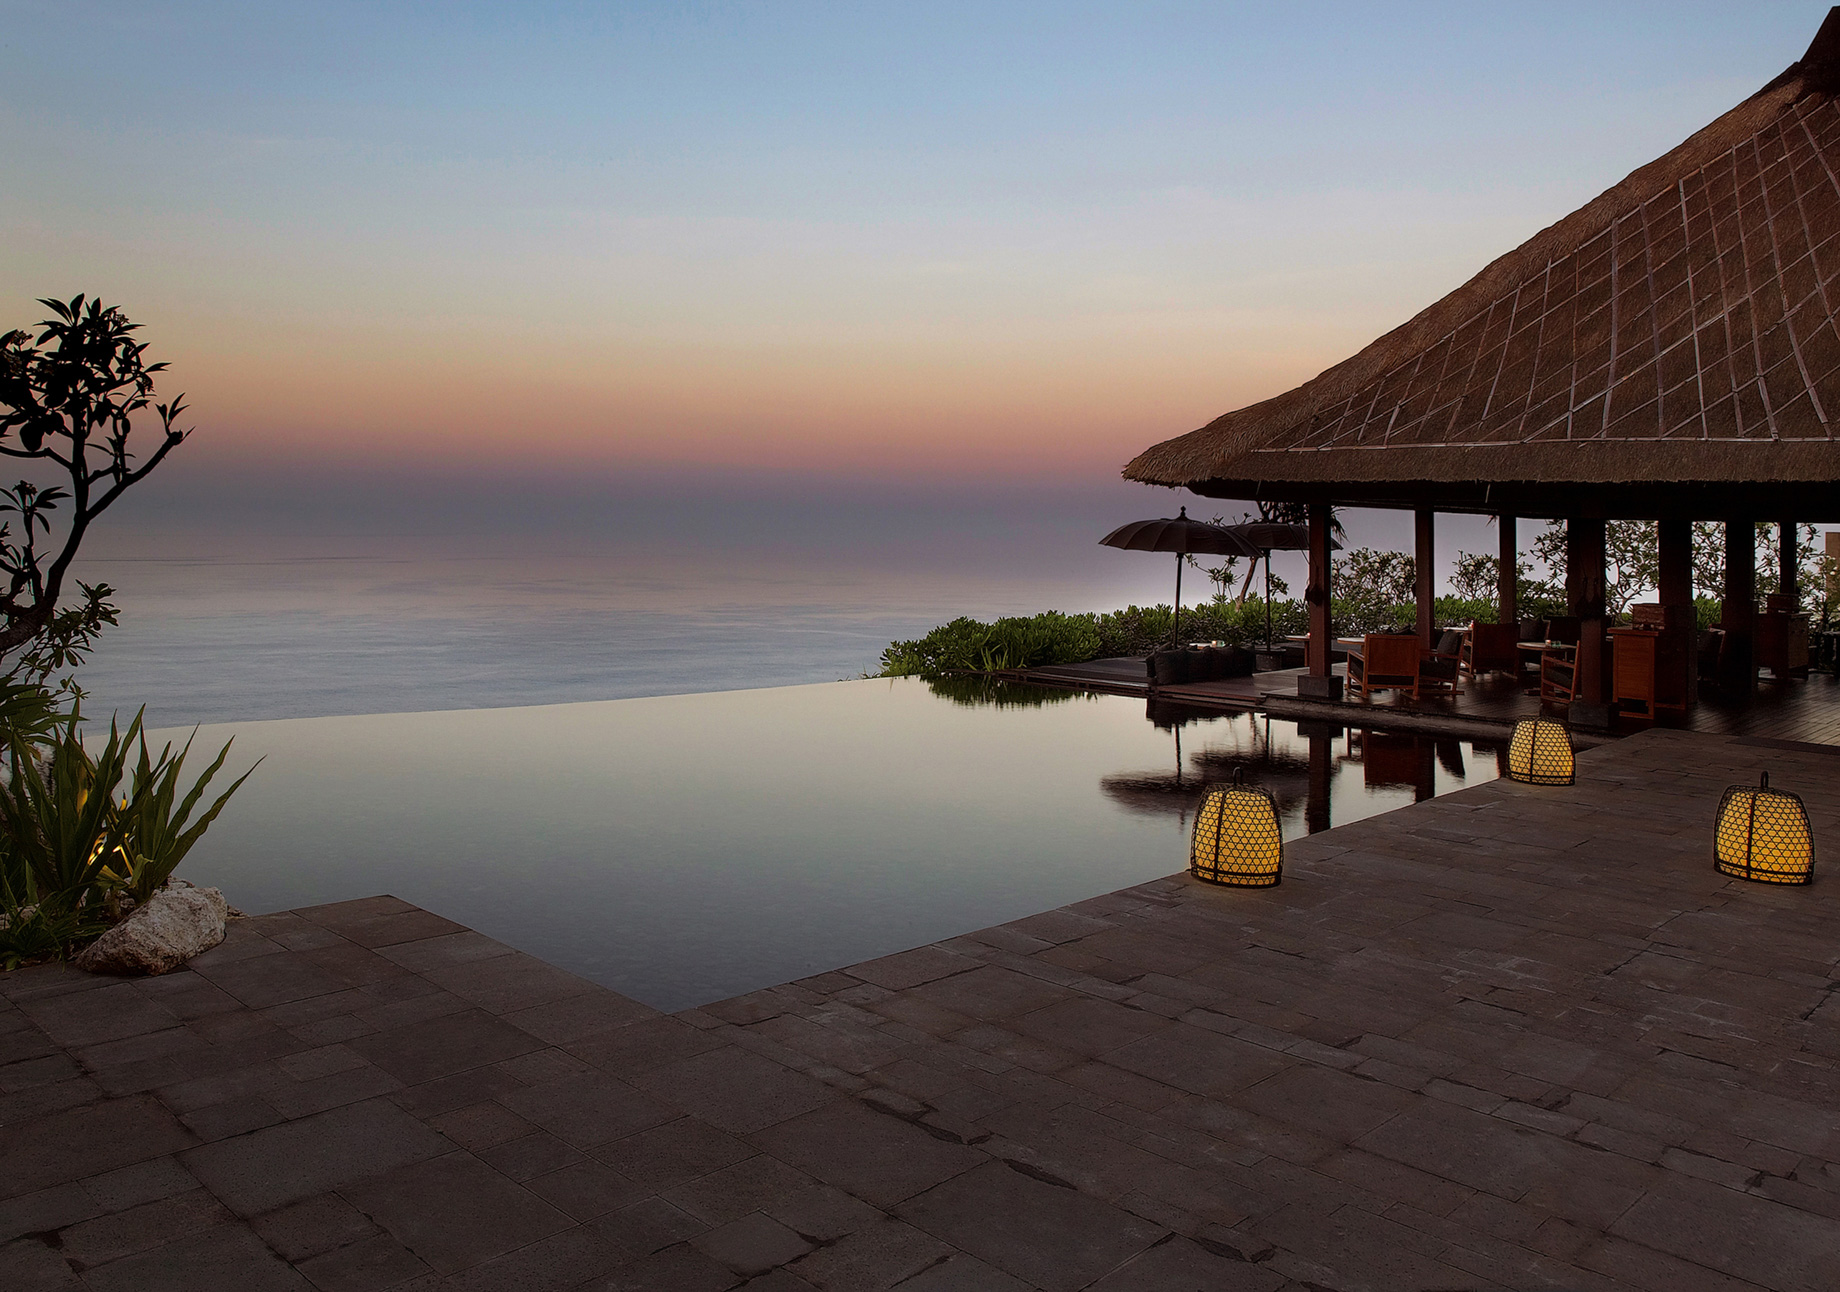 Bvlgari Resort Bali – Uluwatu, Bali, Indonesia – Bvlgari Bar Ocean View Sunset